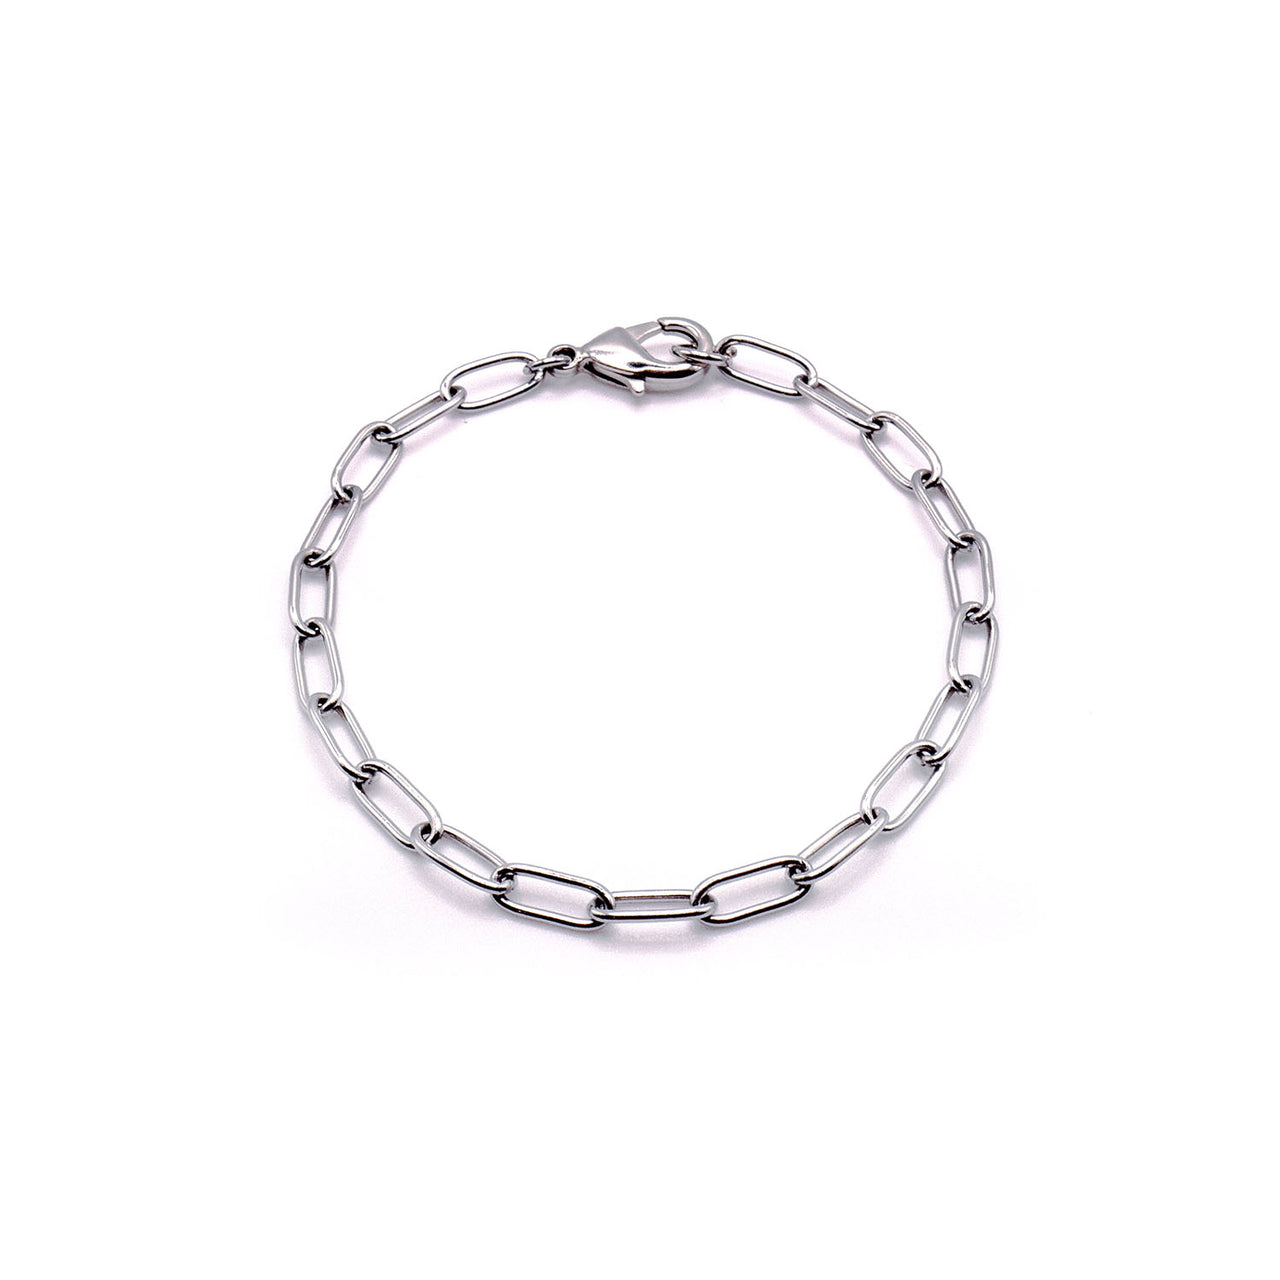 Silver Stainless Steel Chain Bracelet